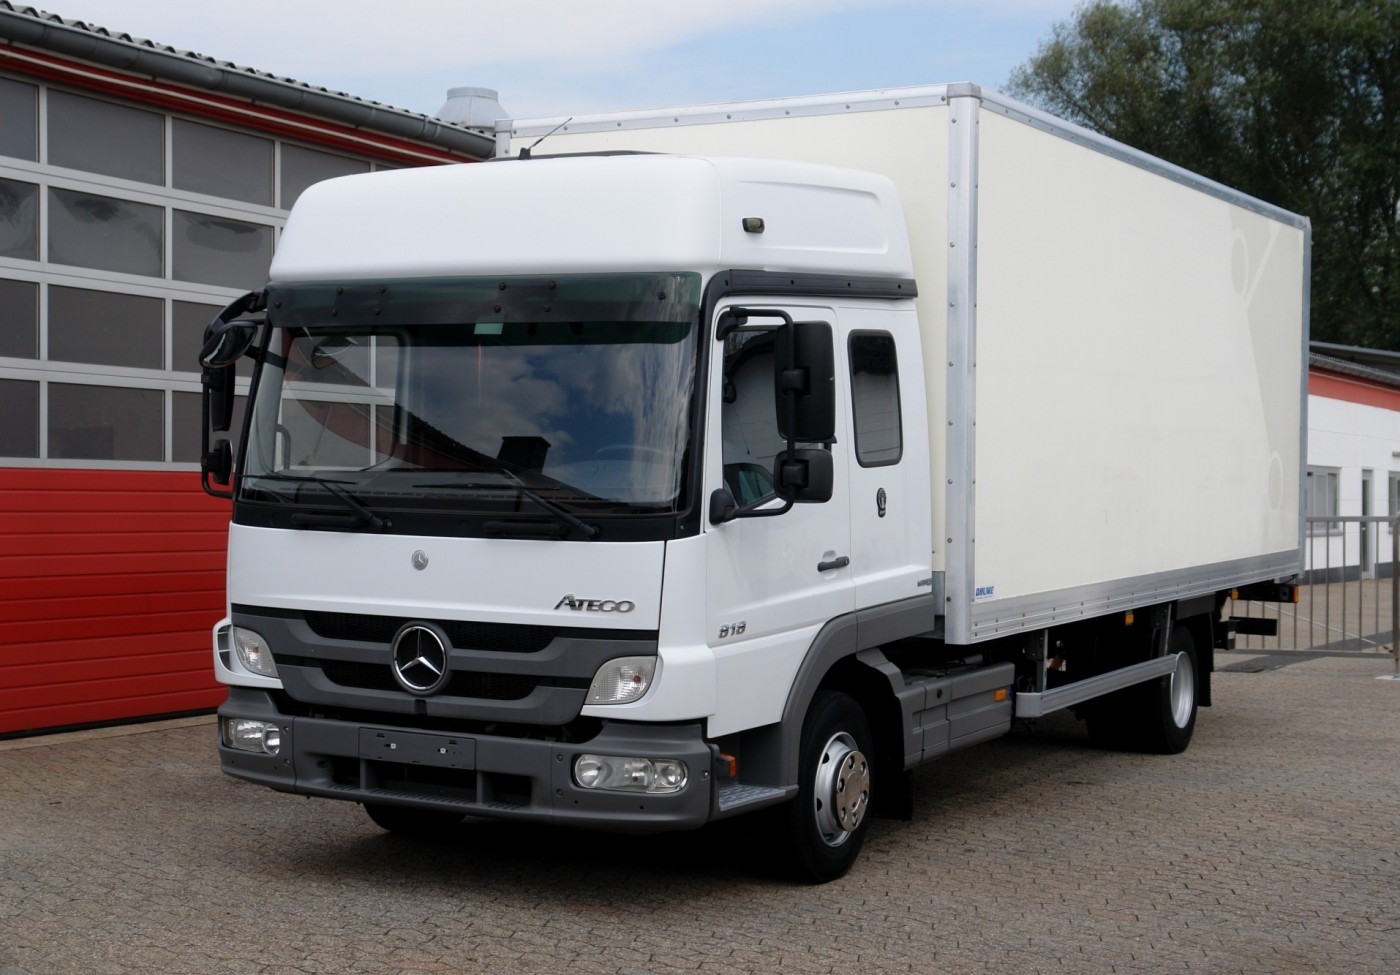 Mercedes-Benz - Atego 818 RL Camion furgon 6,20m Transmisie manuală, suspensie de aer, cabină Bigspace L, Lift hidraulic 1500kg EURO5